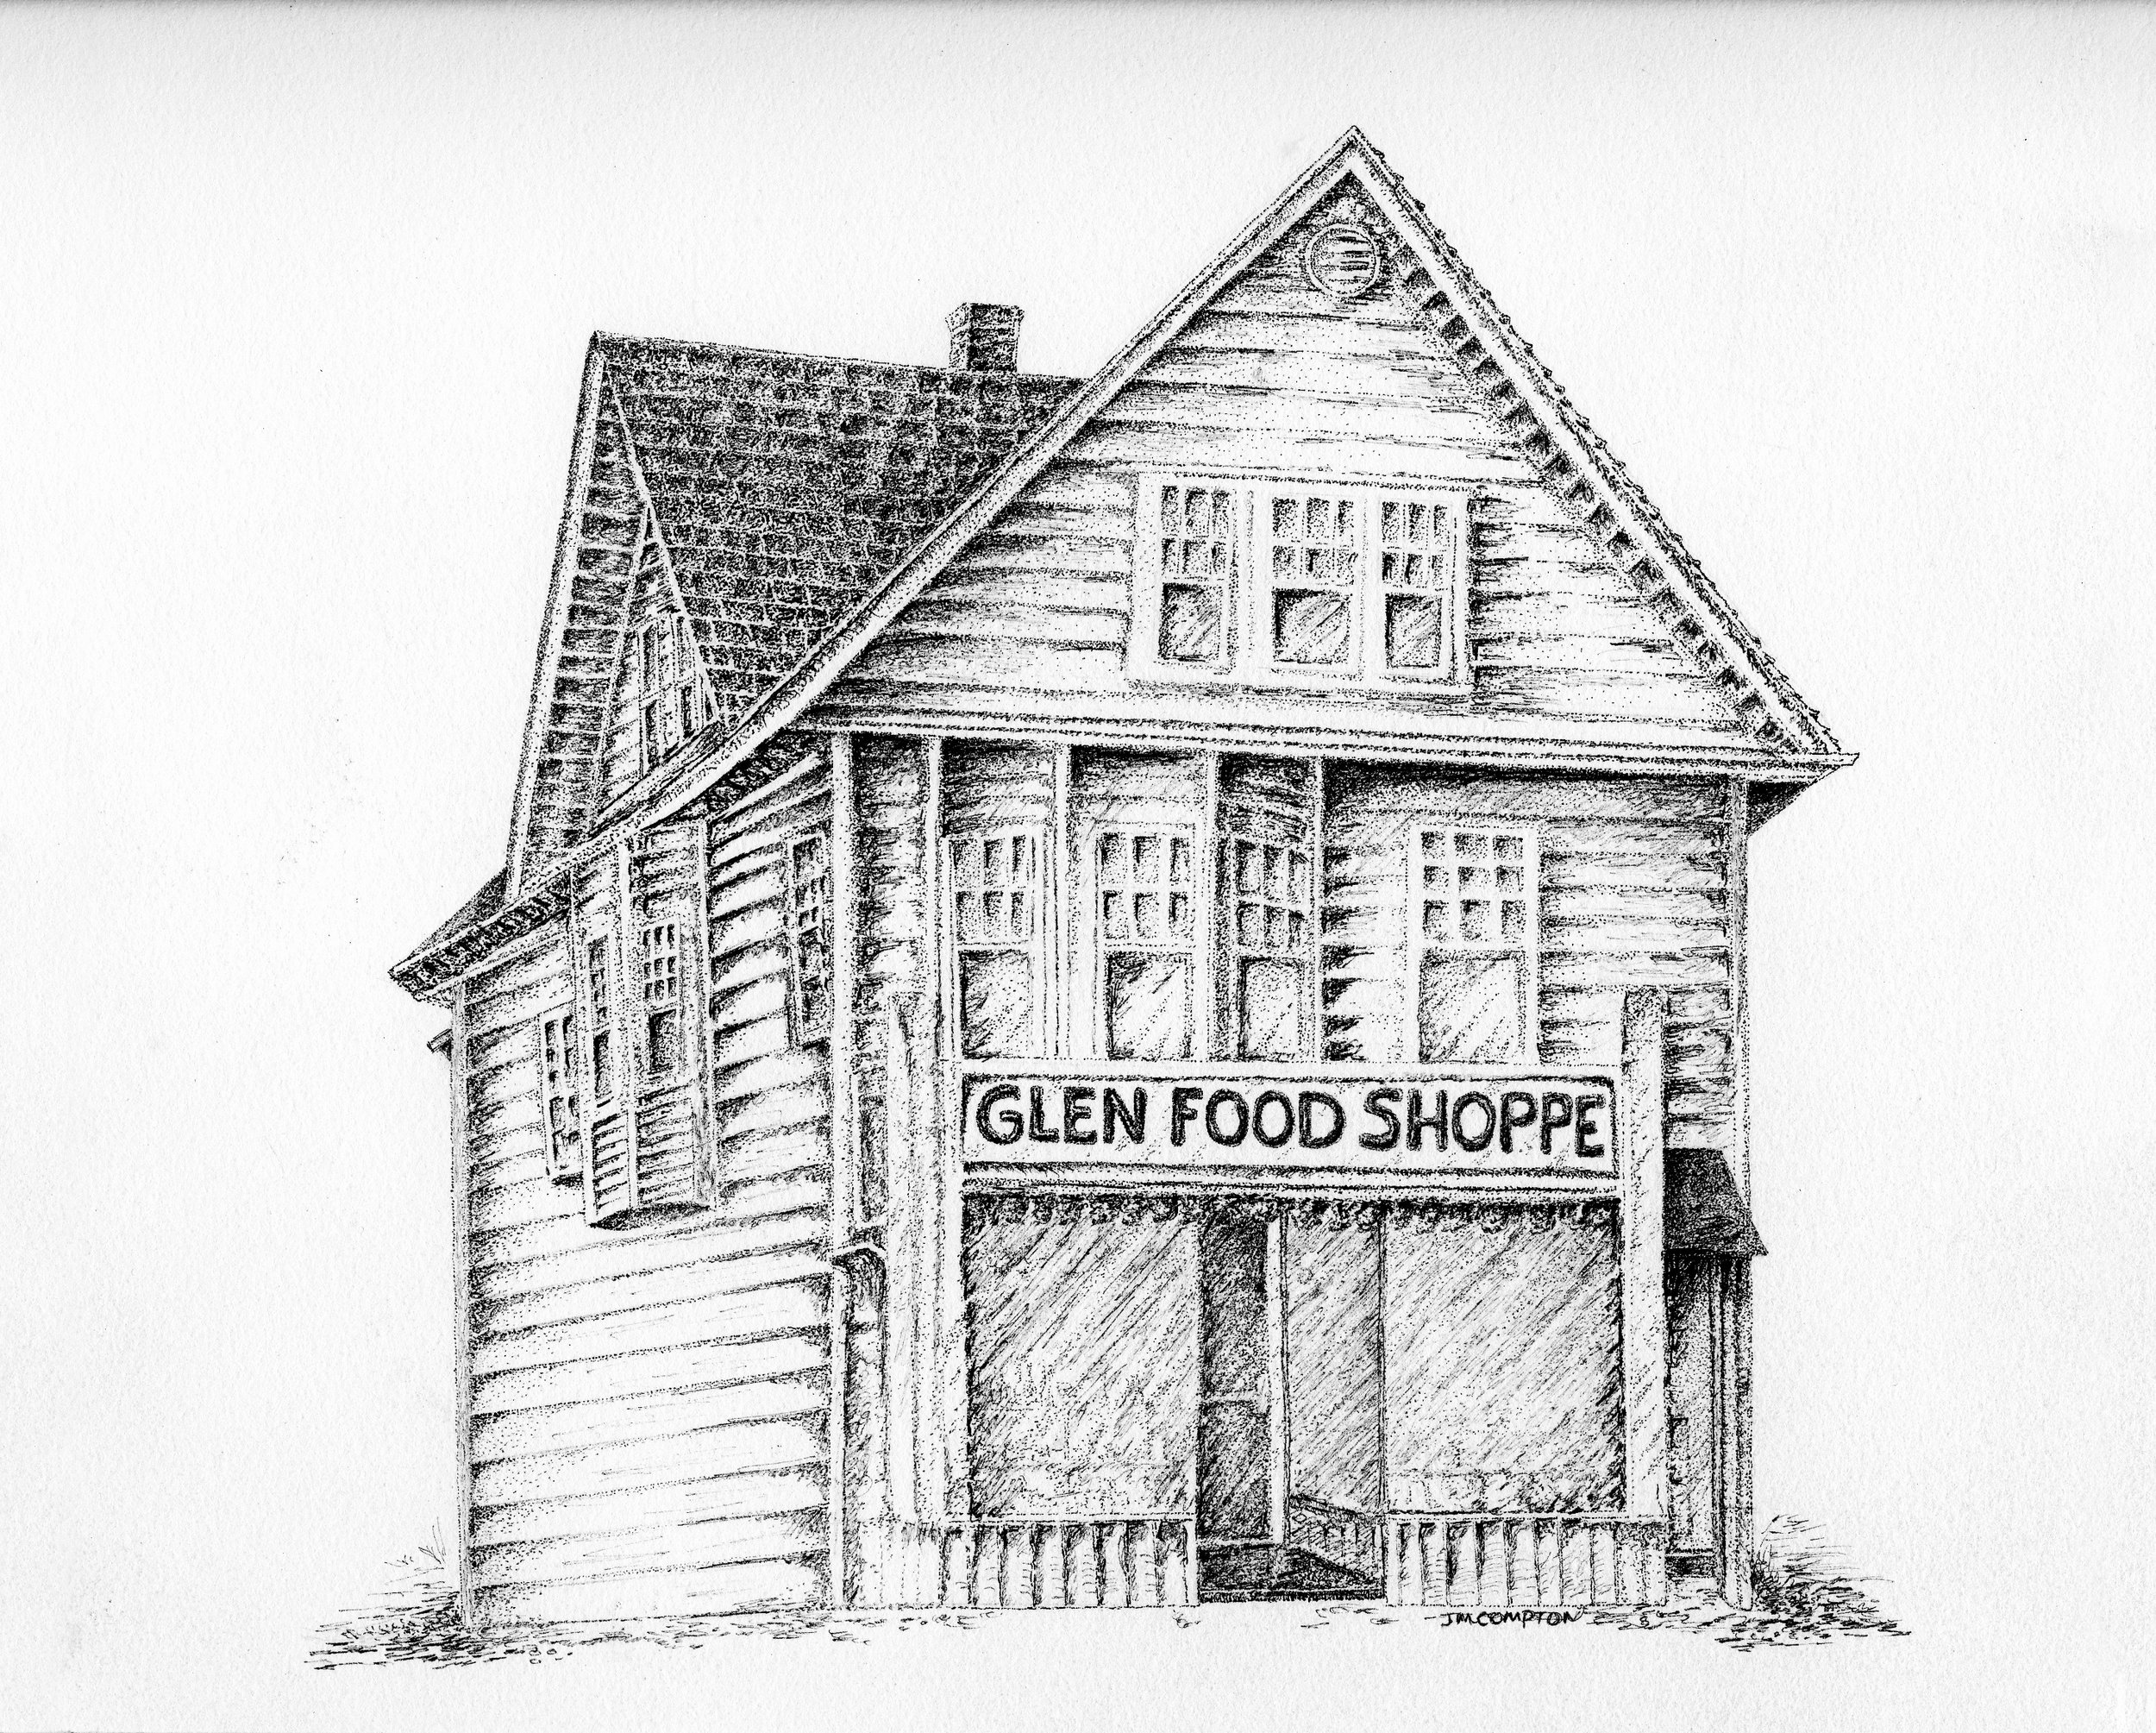 The Old Glen Food shoppe